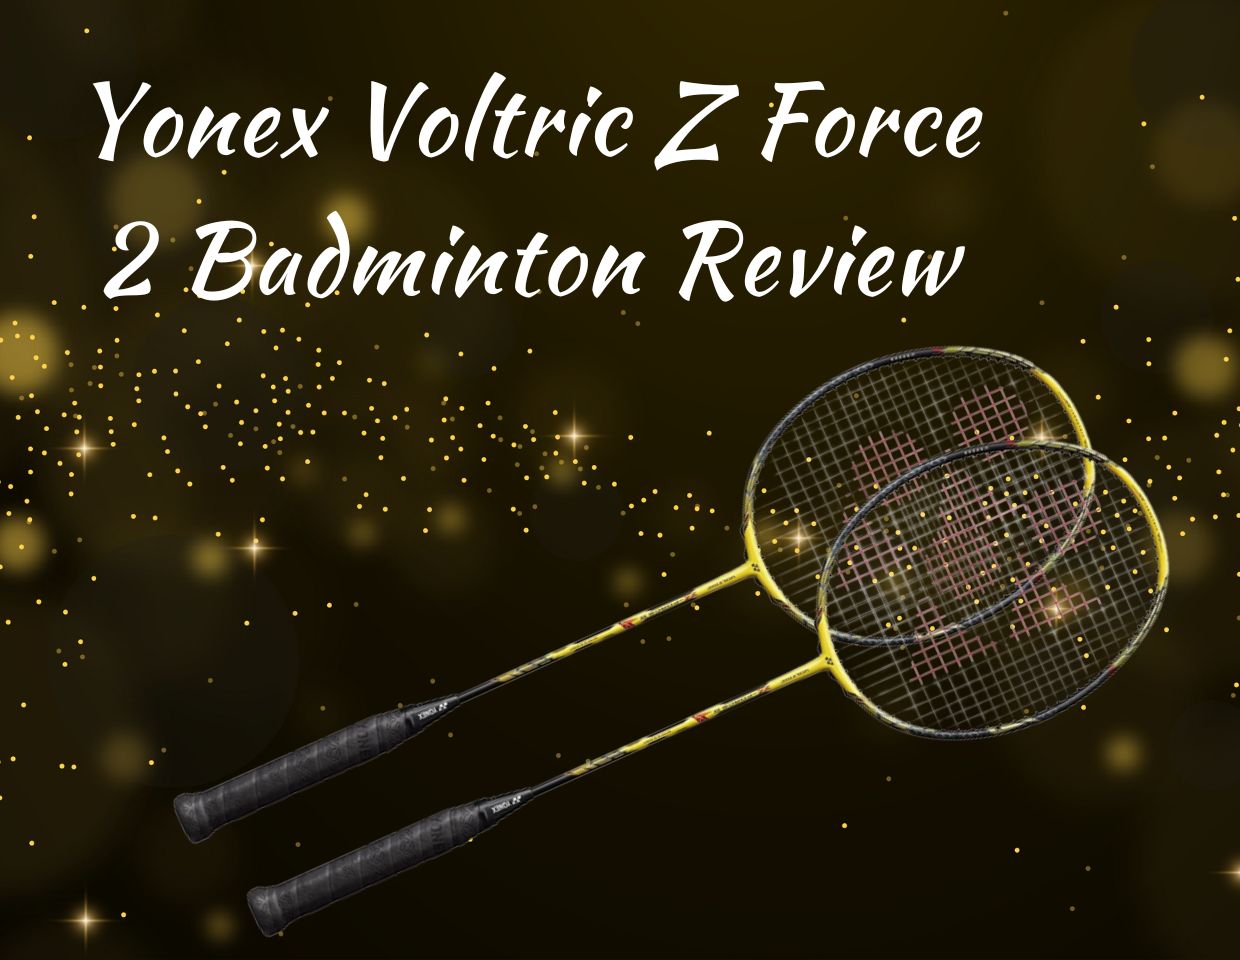 Yonex-Voltric-Z-Force-2-Badminton-Review